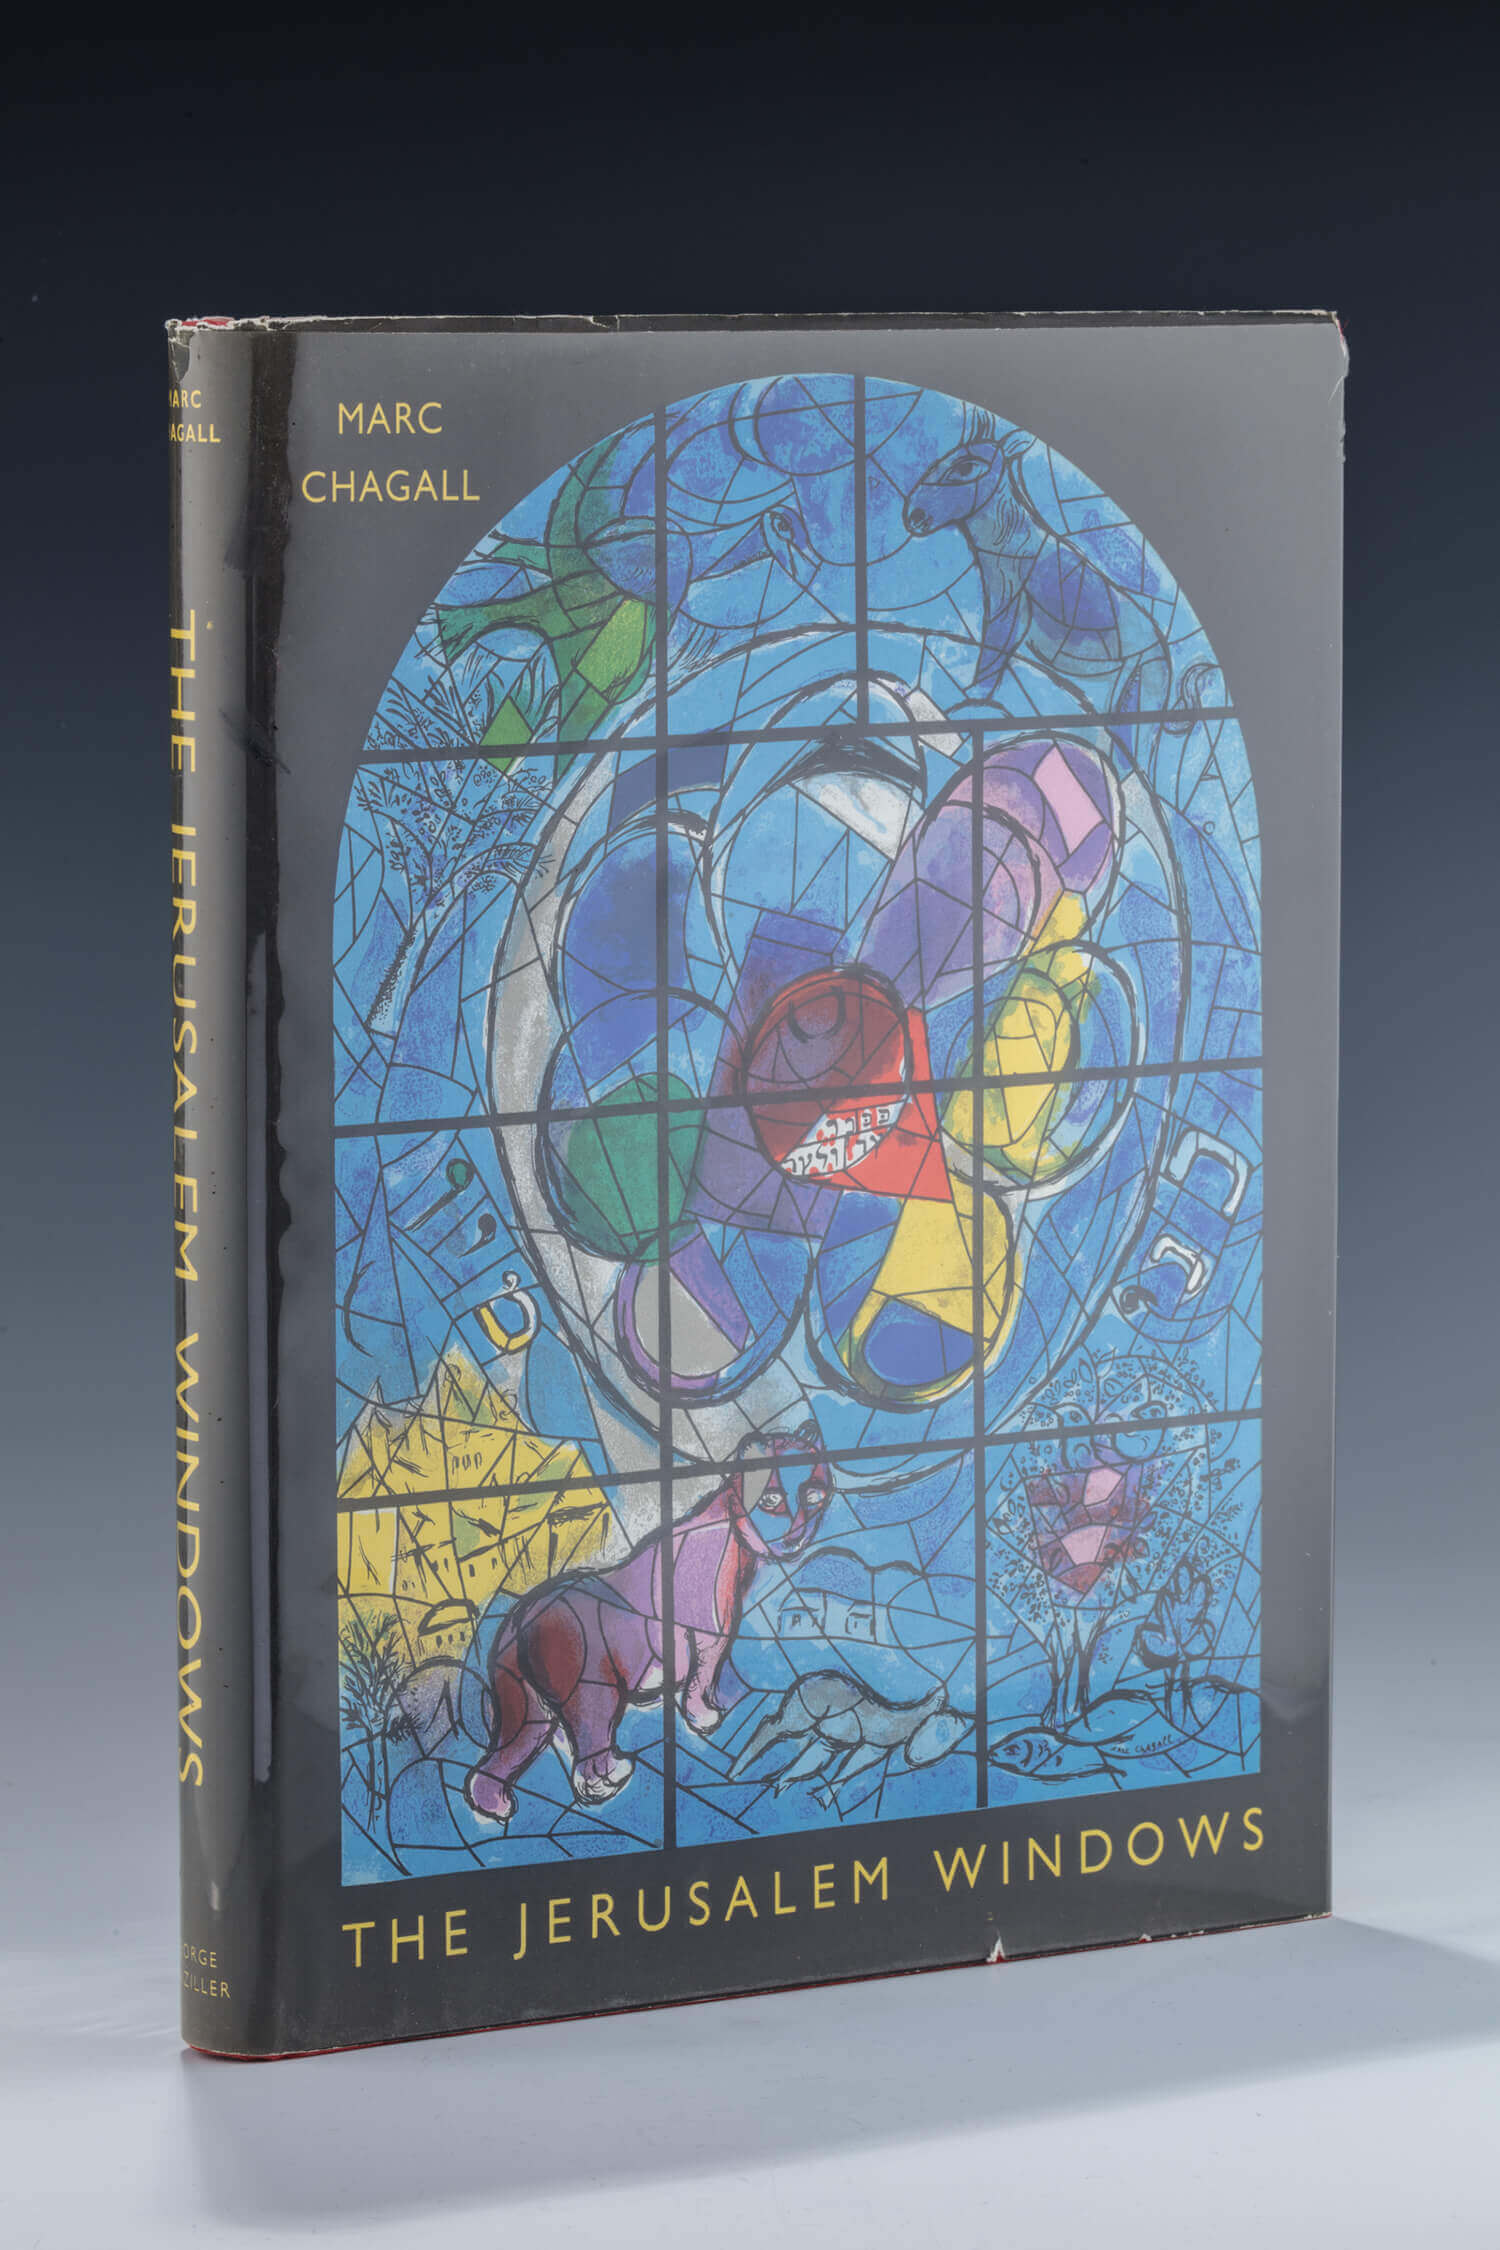 150. MARC CHAGALL, “JERUSALEM WINDOWS” BOOK WITH 2 ORIGINAL LITHOGRAPHS